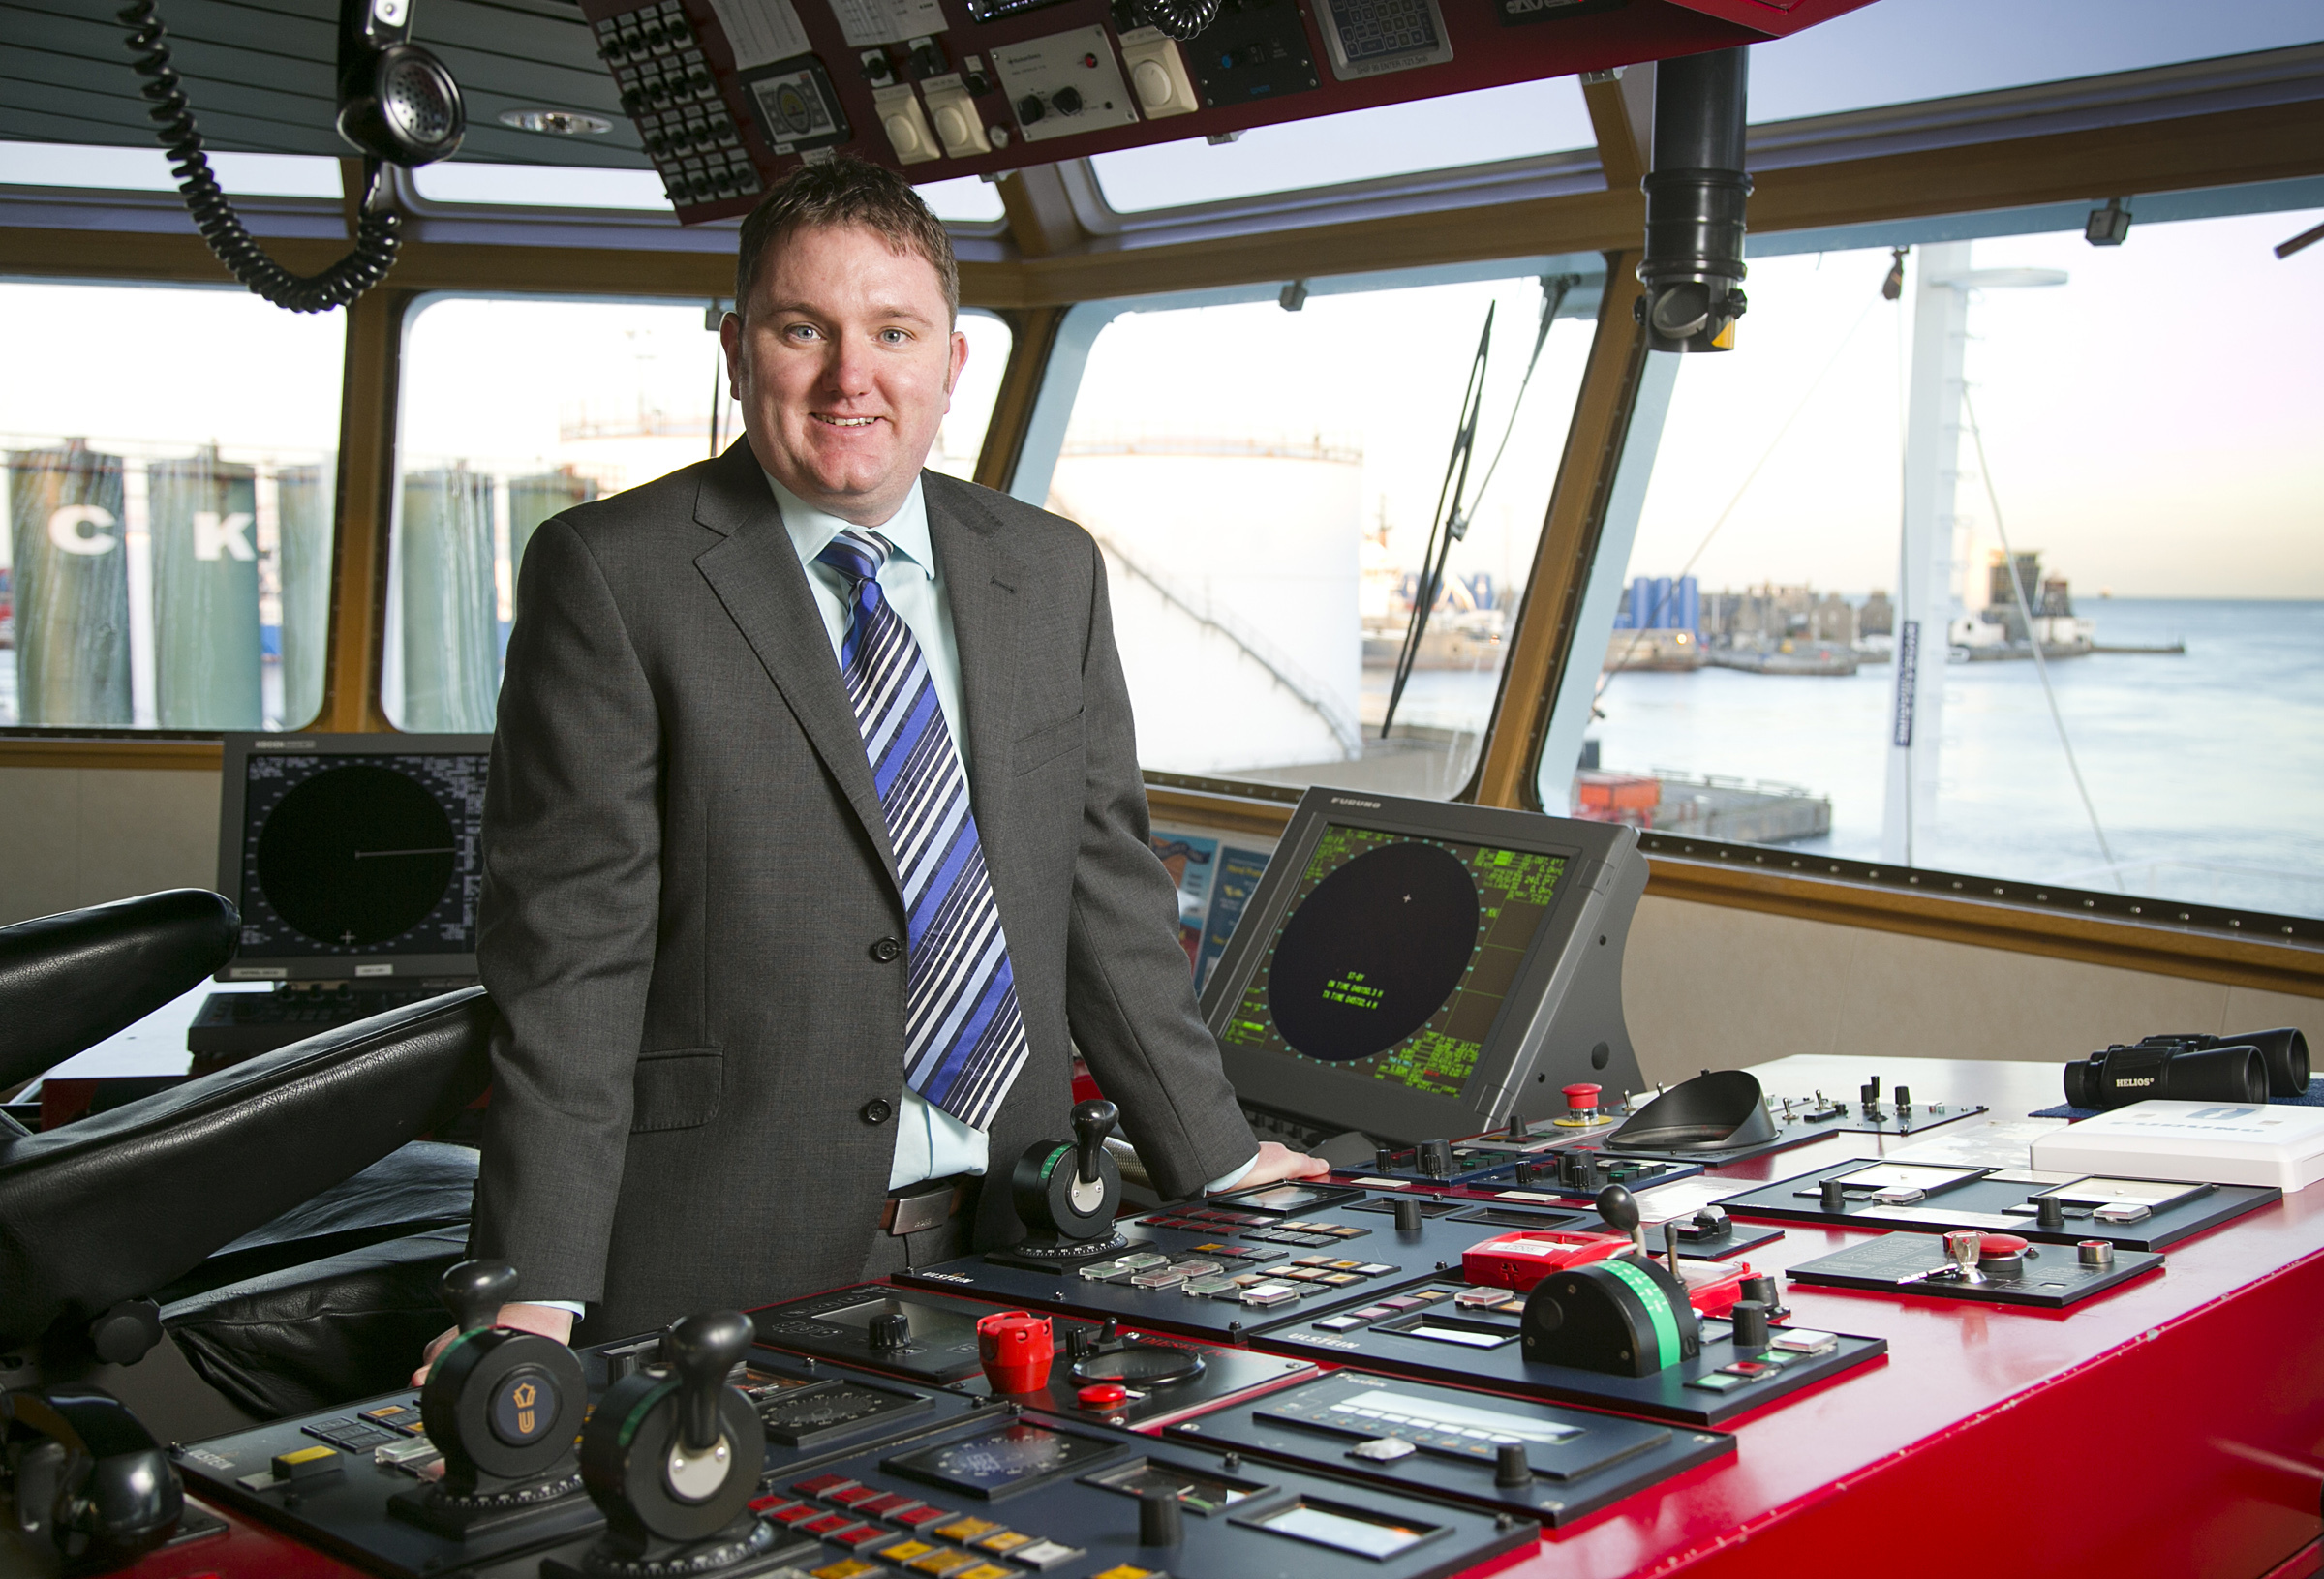 Matthew Gordon has joined Atlantic Offshore Rescue